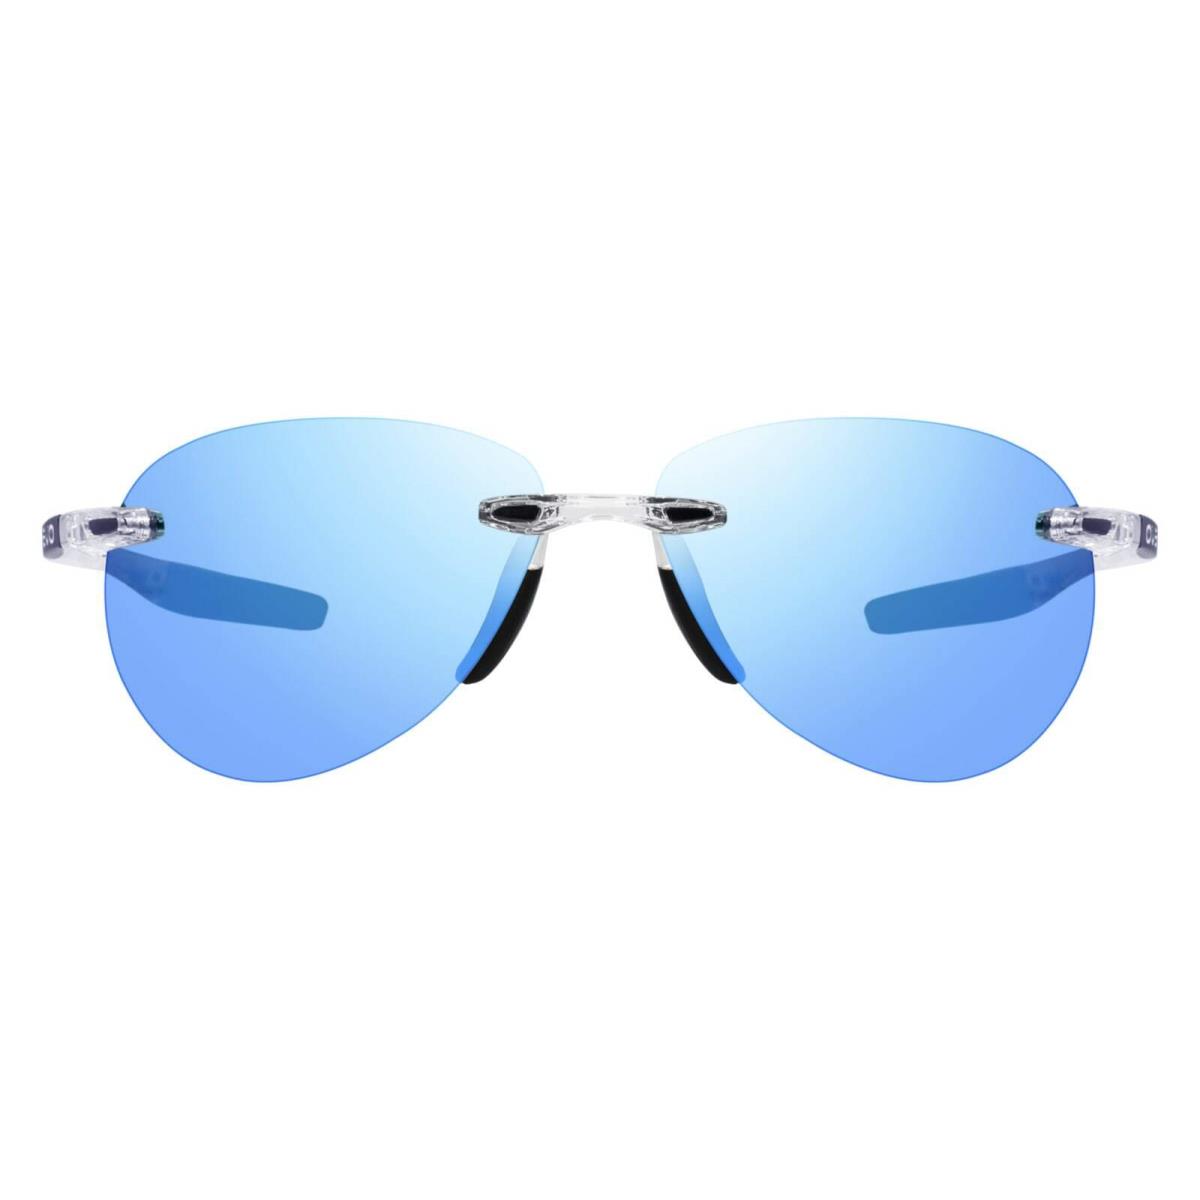 Revo sunglasses  - Crystal Frame, Blue Water Lens